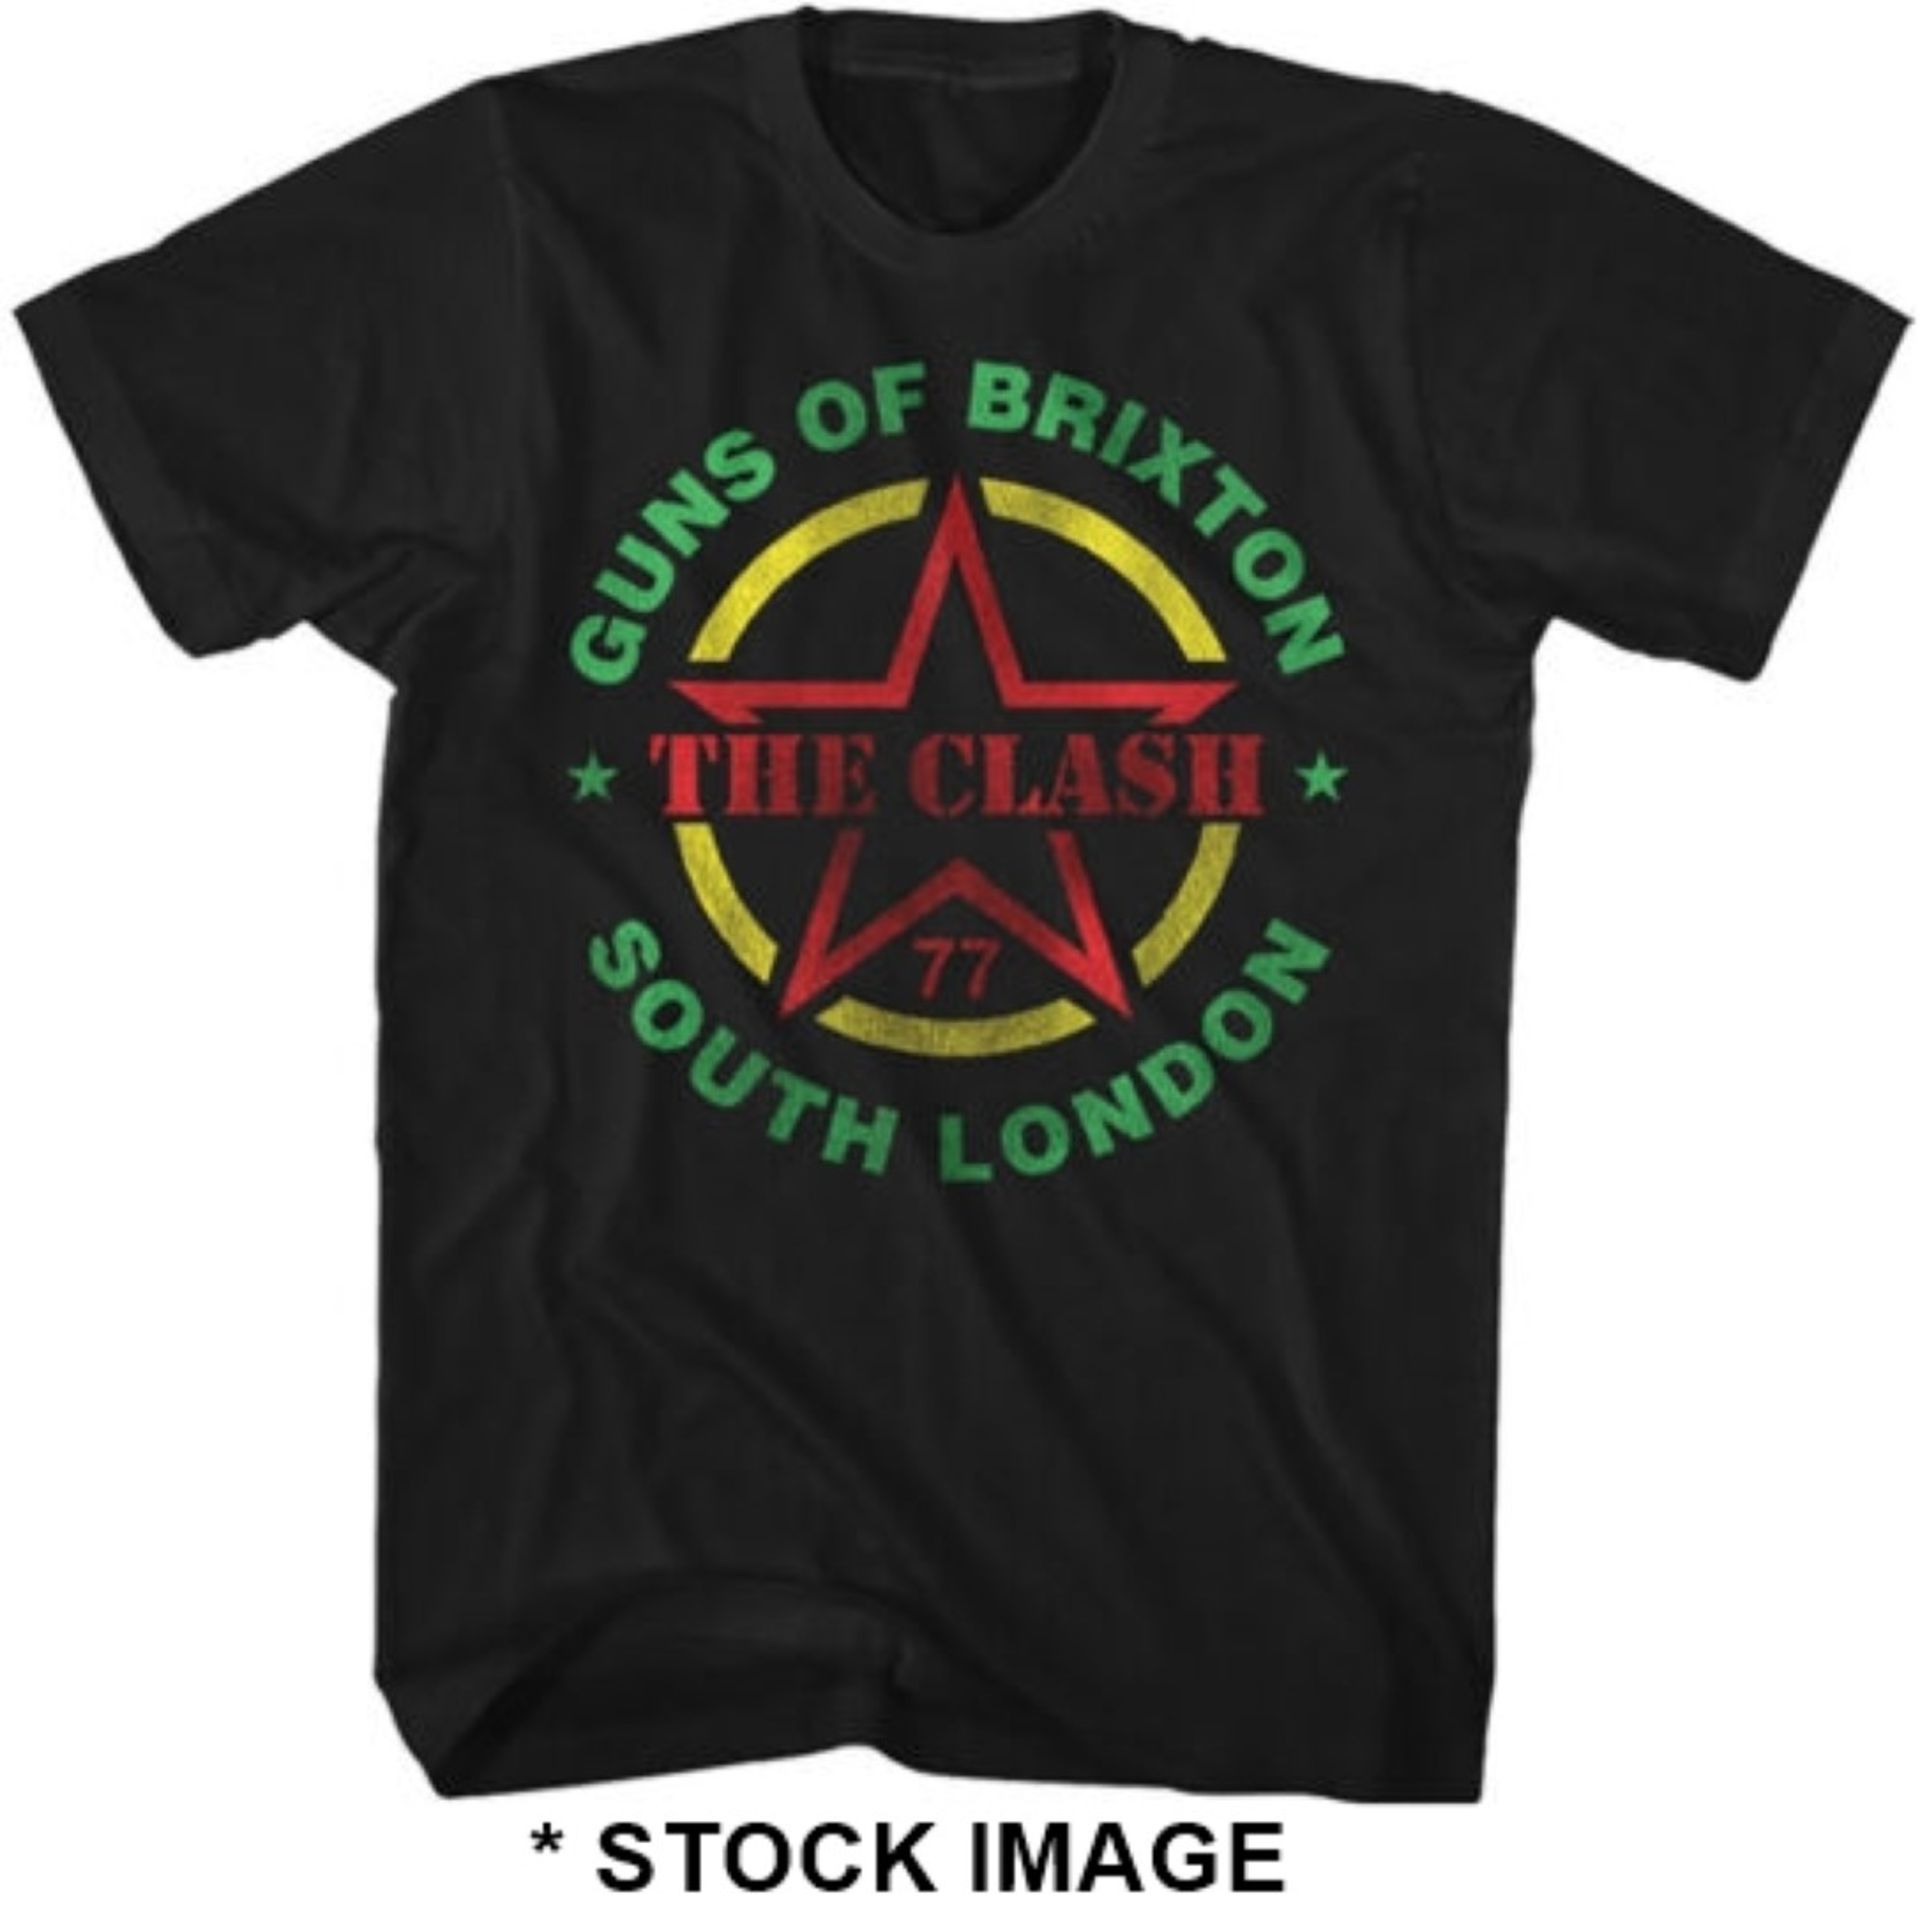 1 x THE CLASH Guns Of Brixton Logo Short Sleeve Men's T-Shirt by Tultek- Size: XXL - Colour: